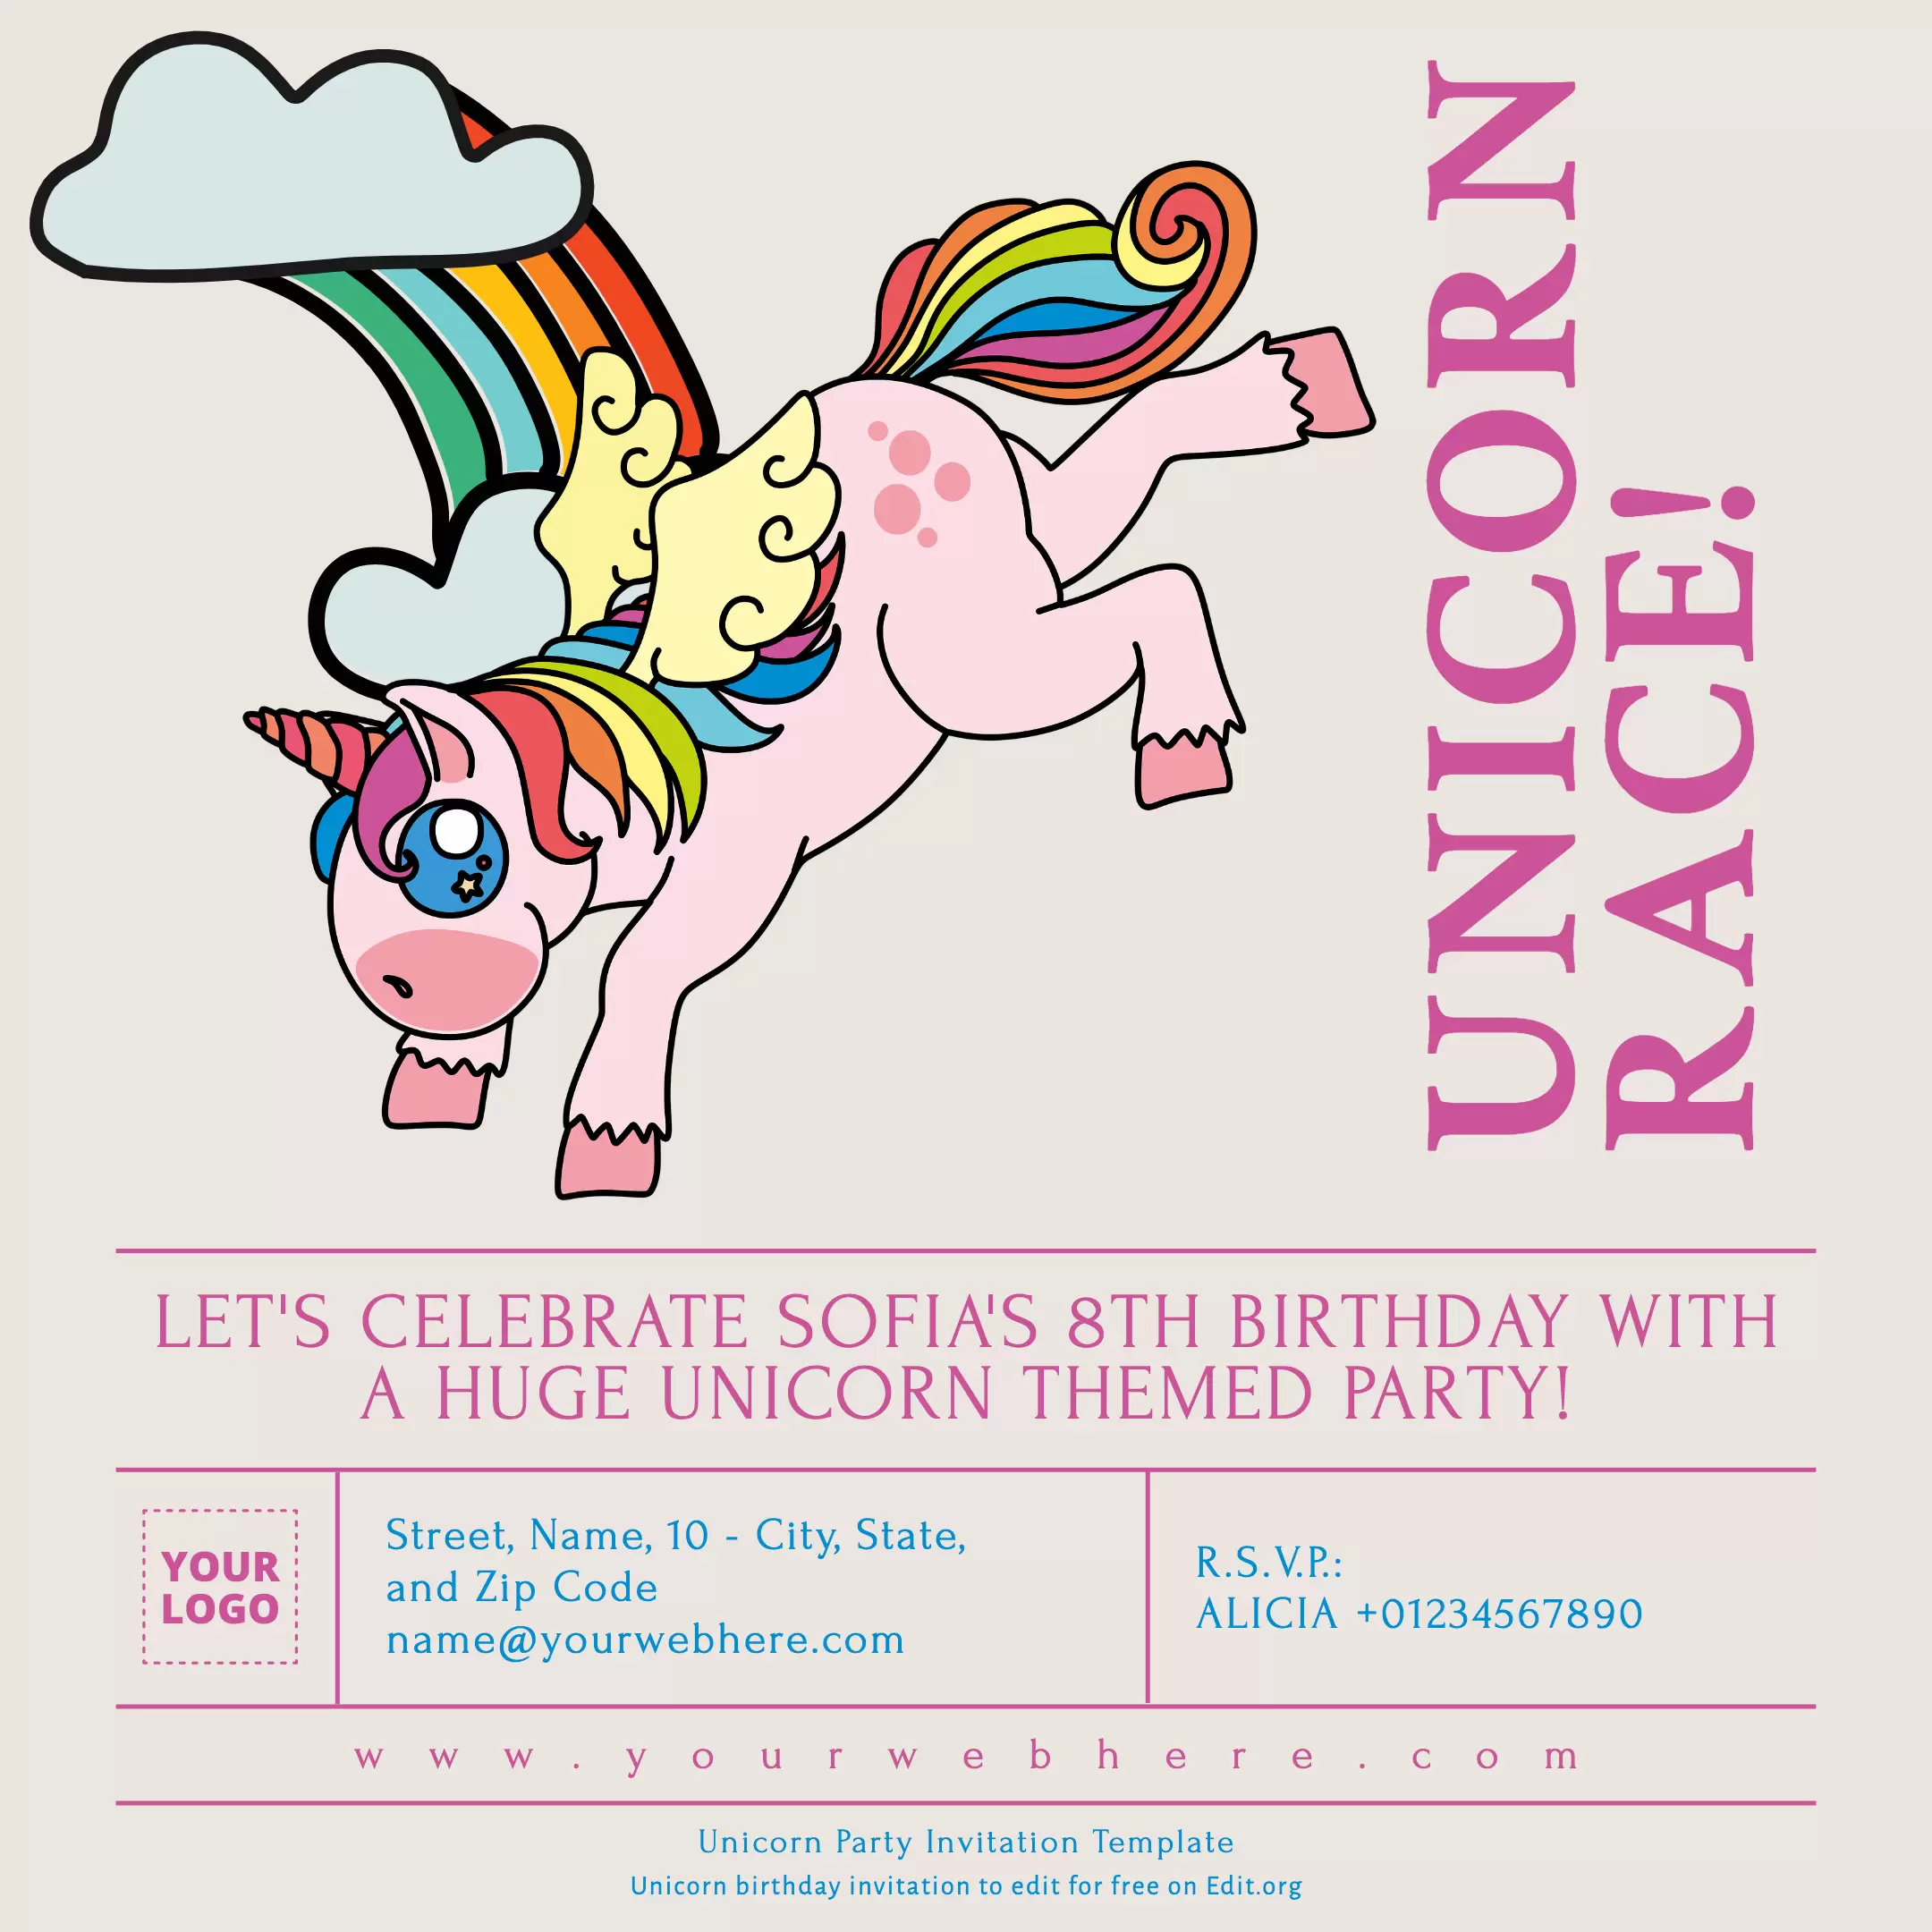 Free blank Unicorn Birthday invitations to customize online